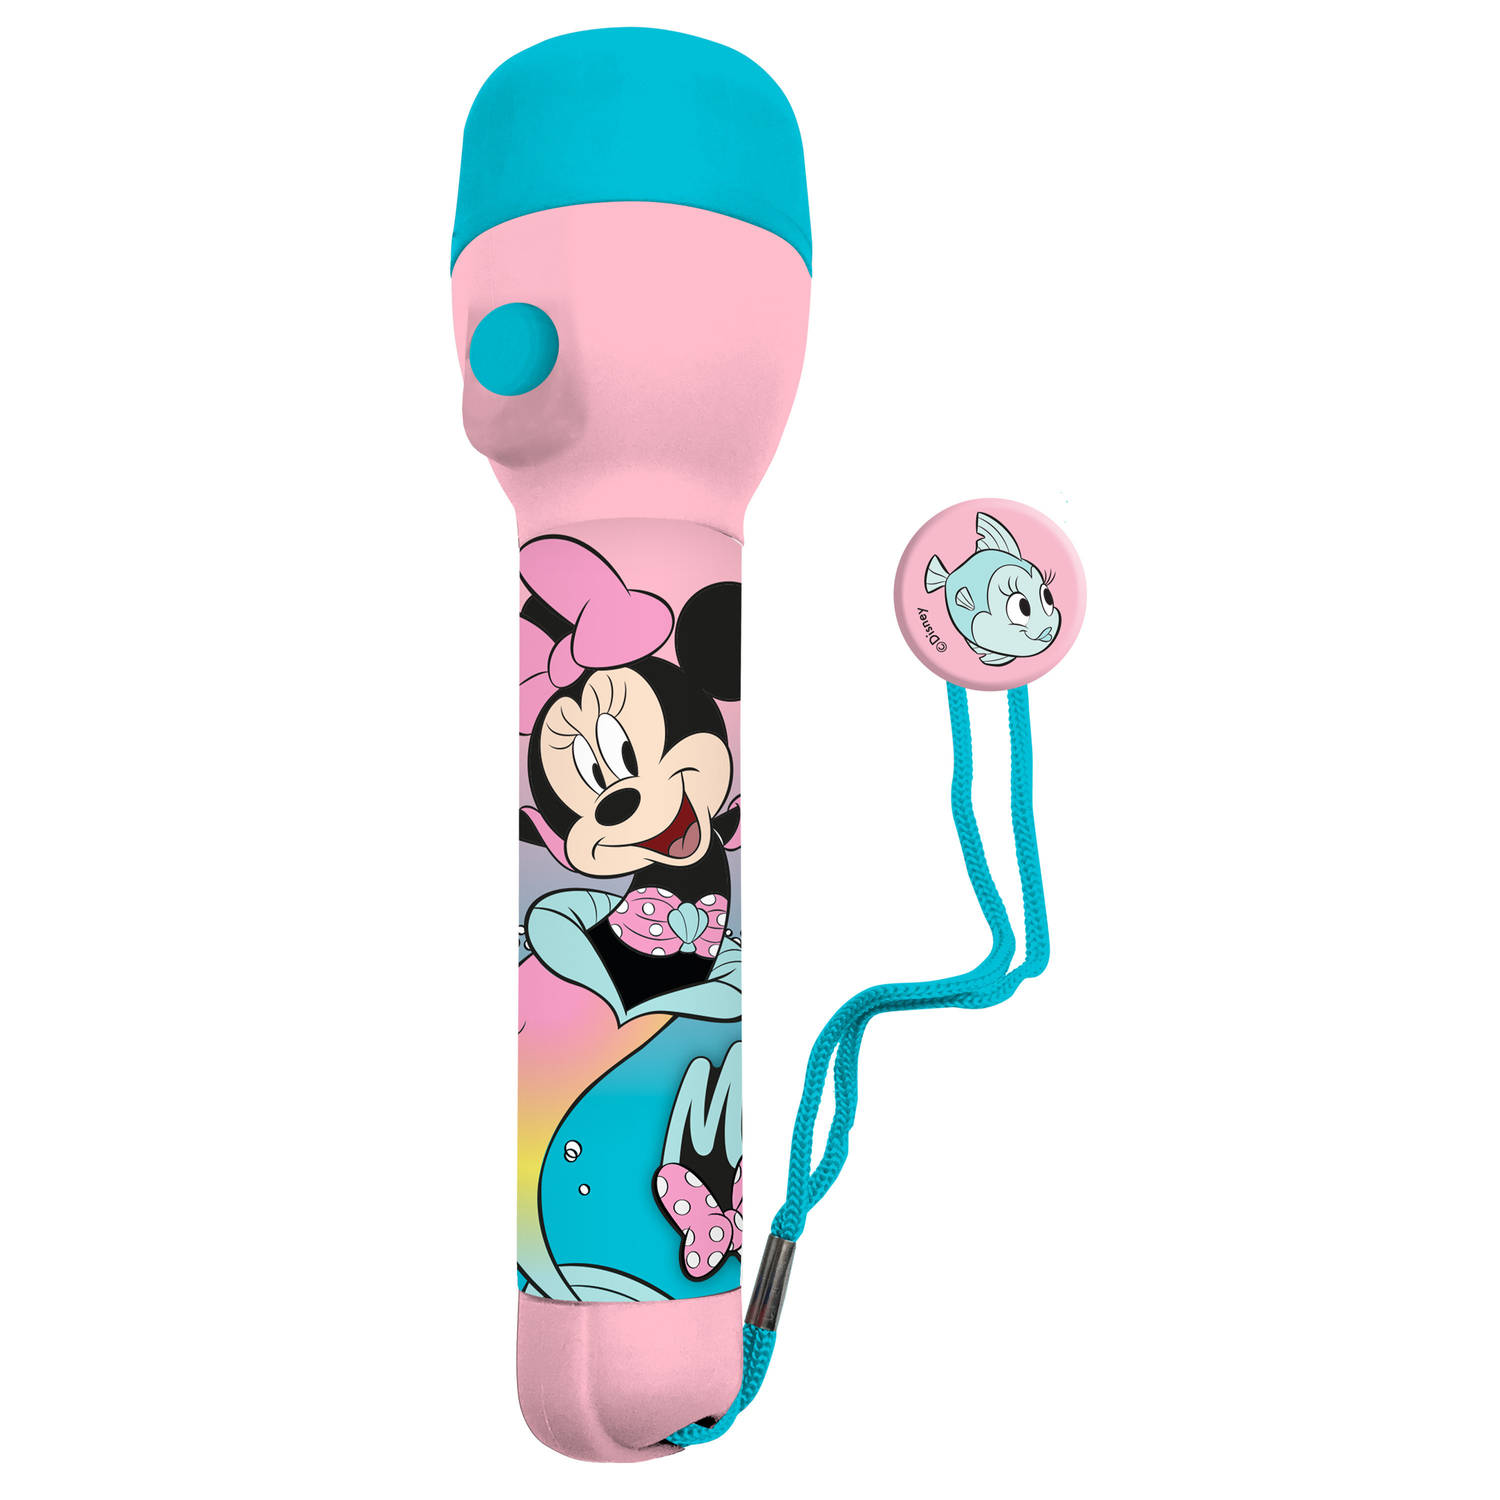 Disney Minnie Mouse kinder zaklamp/leeslamp - roze/blauw - kunststof - 16 x 4 cm - Kinder zaklampen